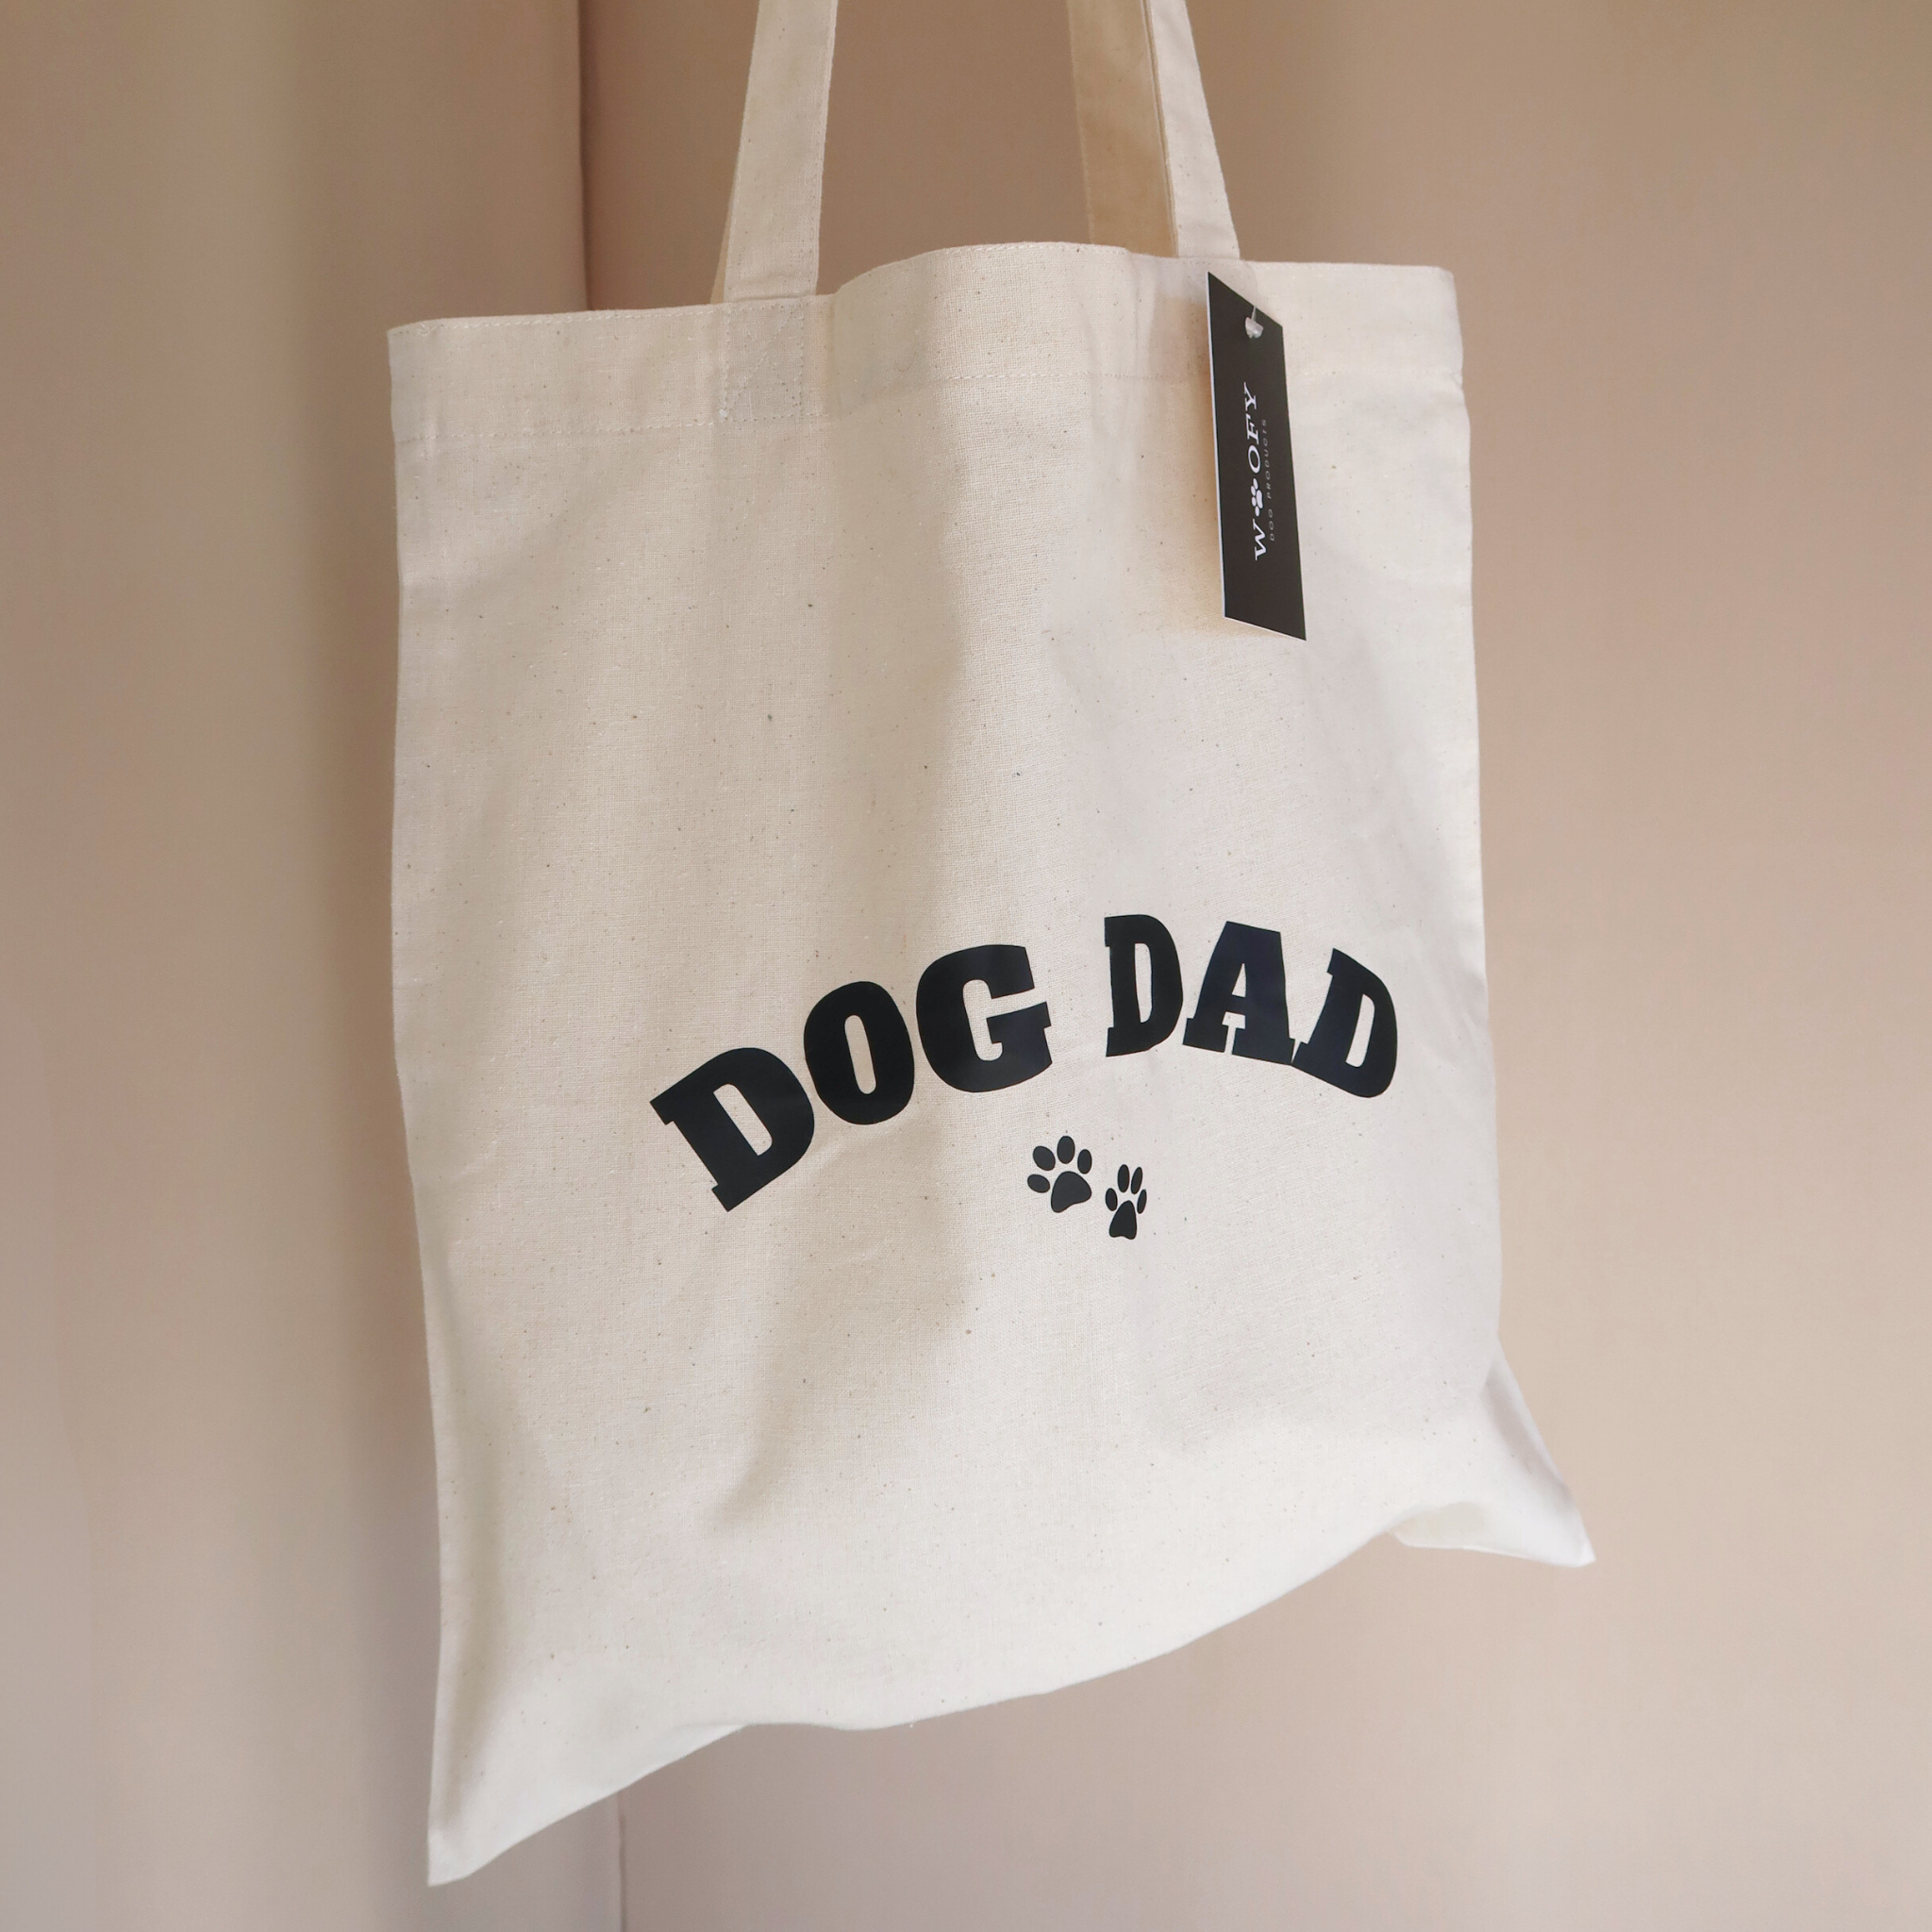 'Dog dad' tote bag